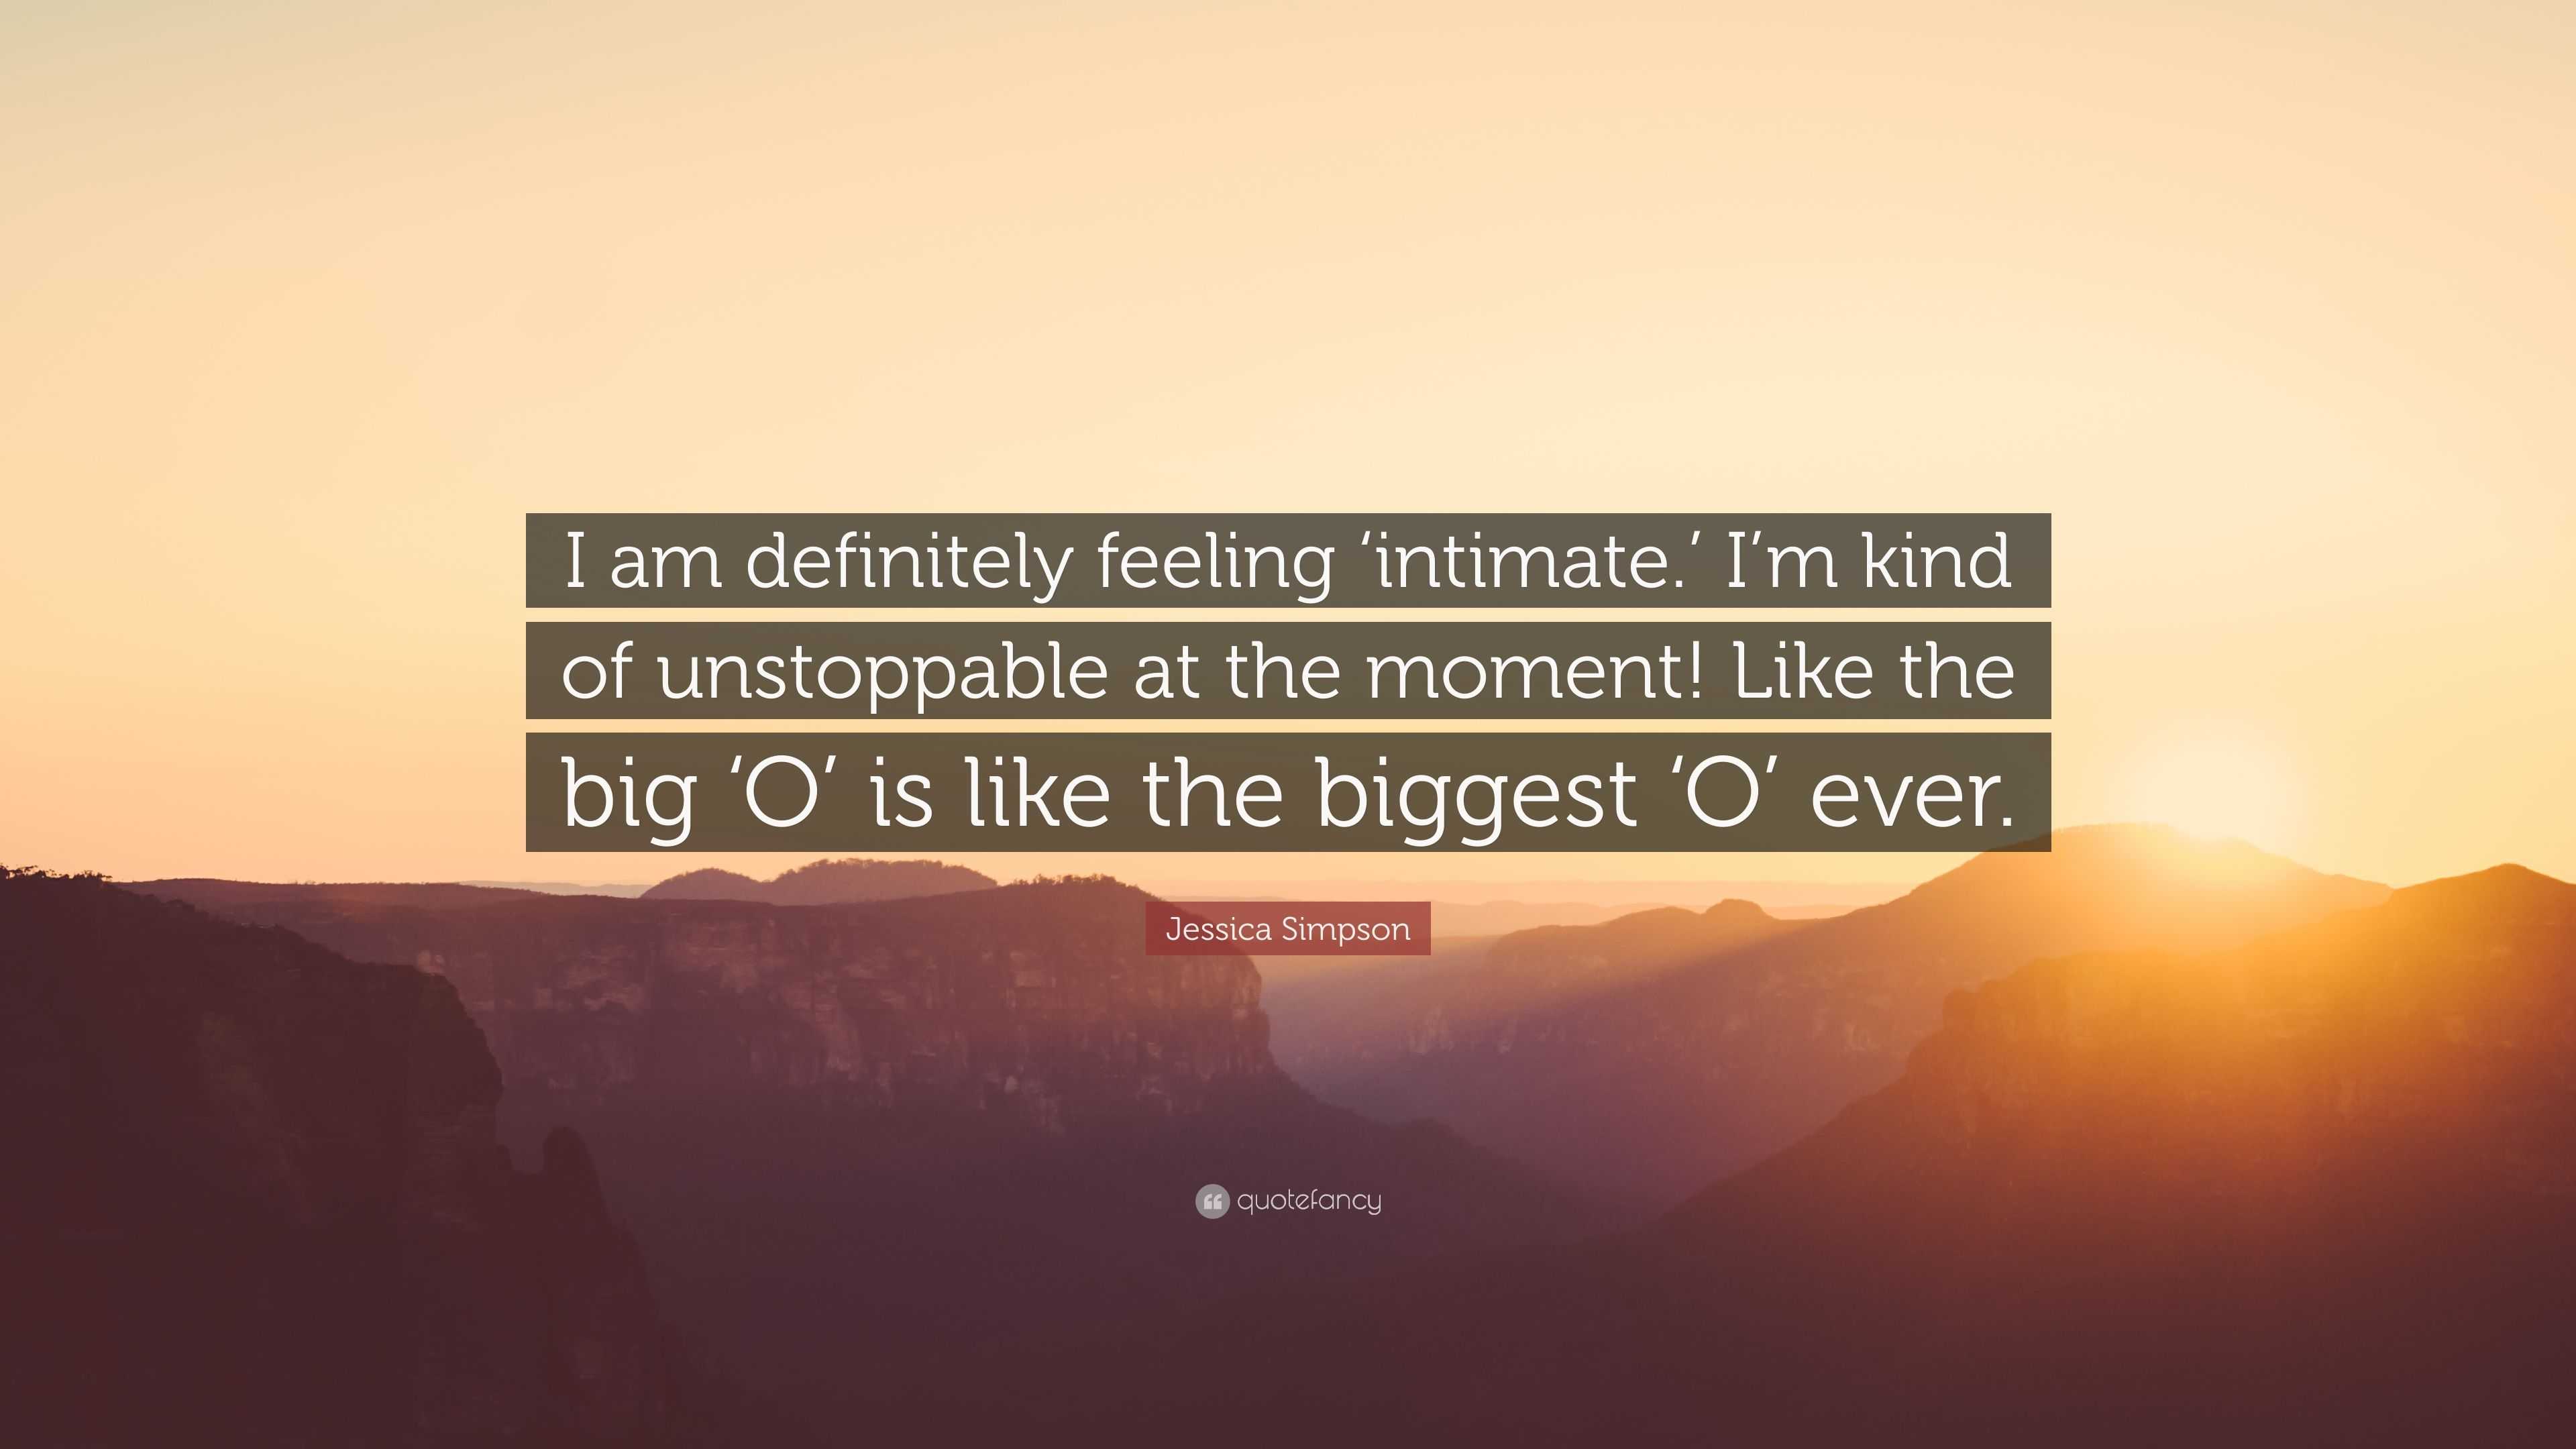 Jessica Simpson Quote: “I am definitely feeling 'intimate.' I'm